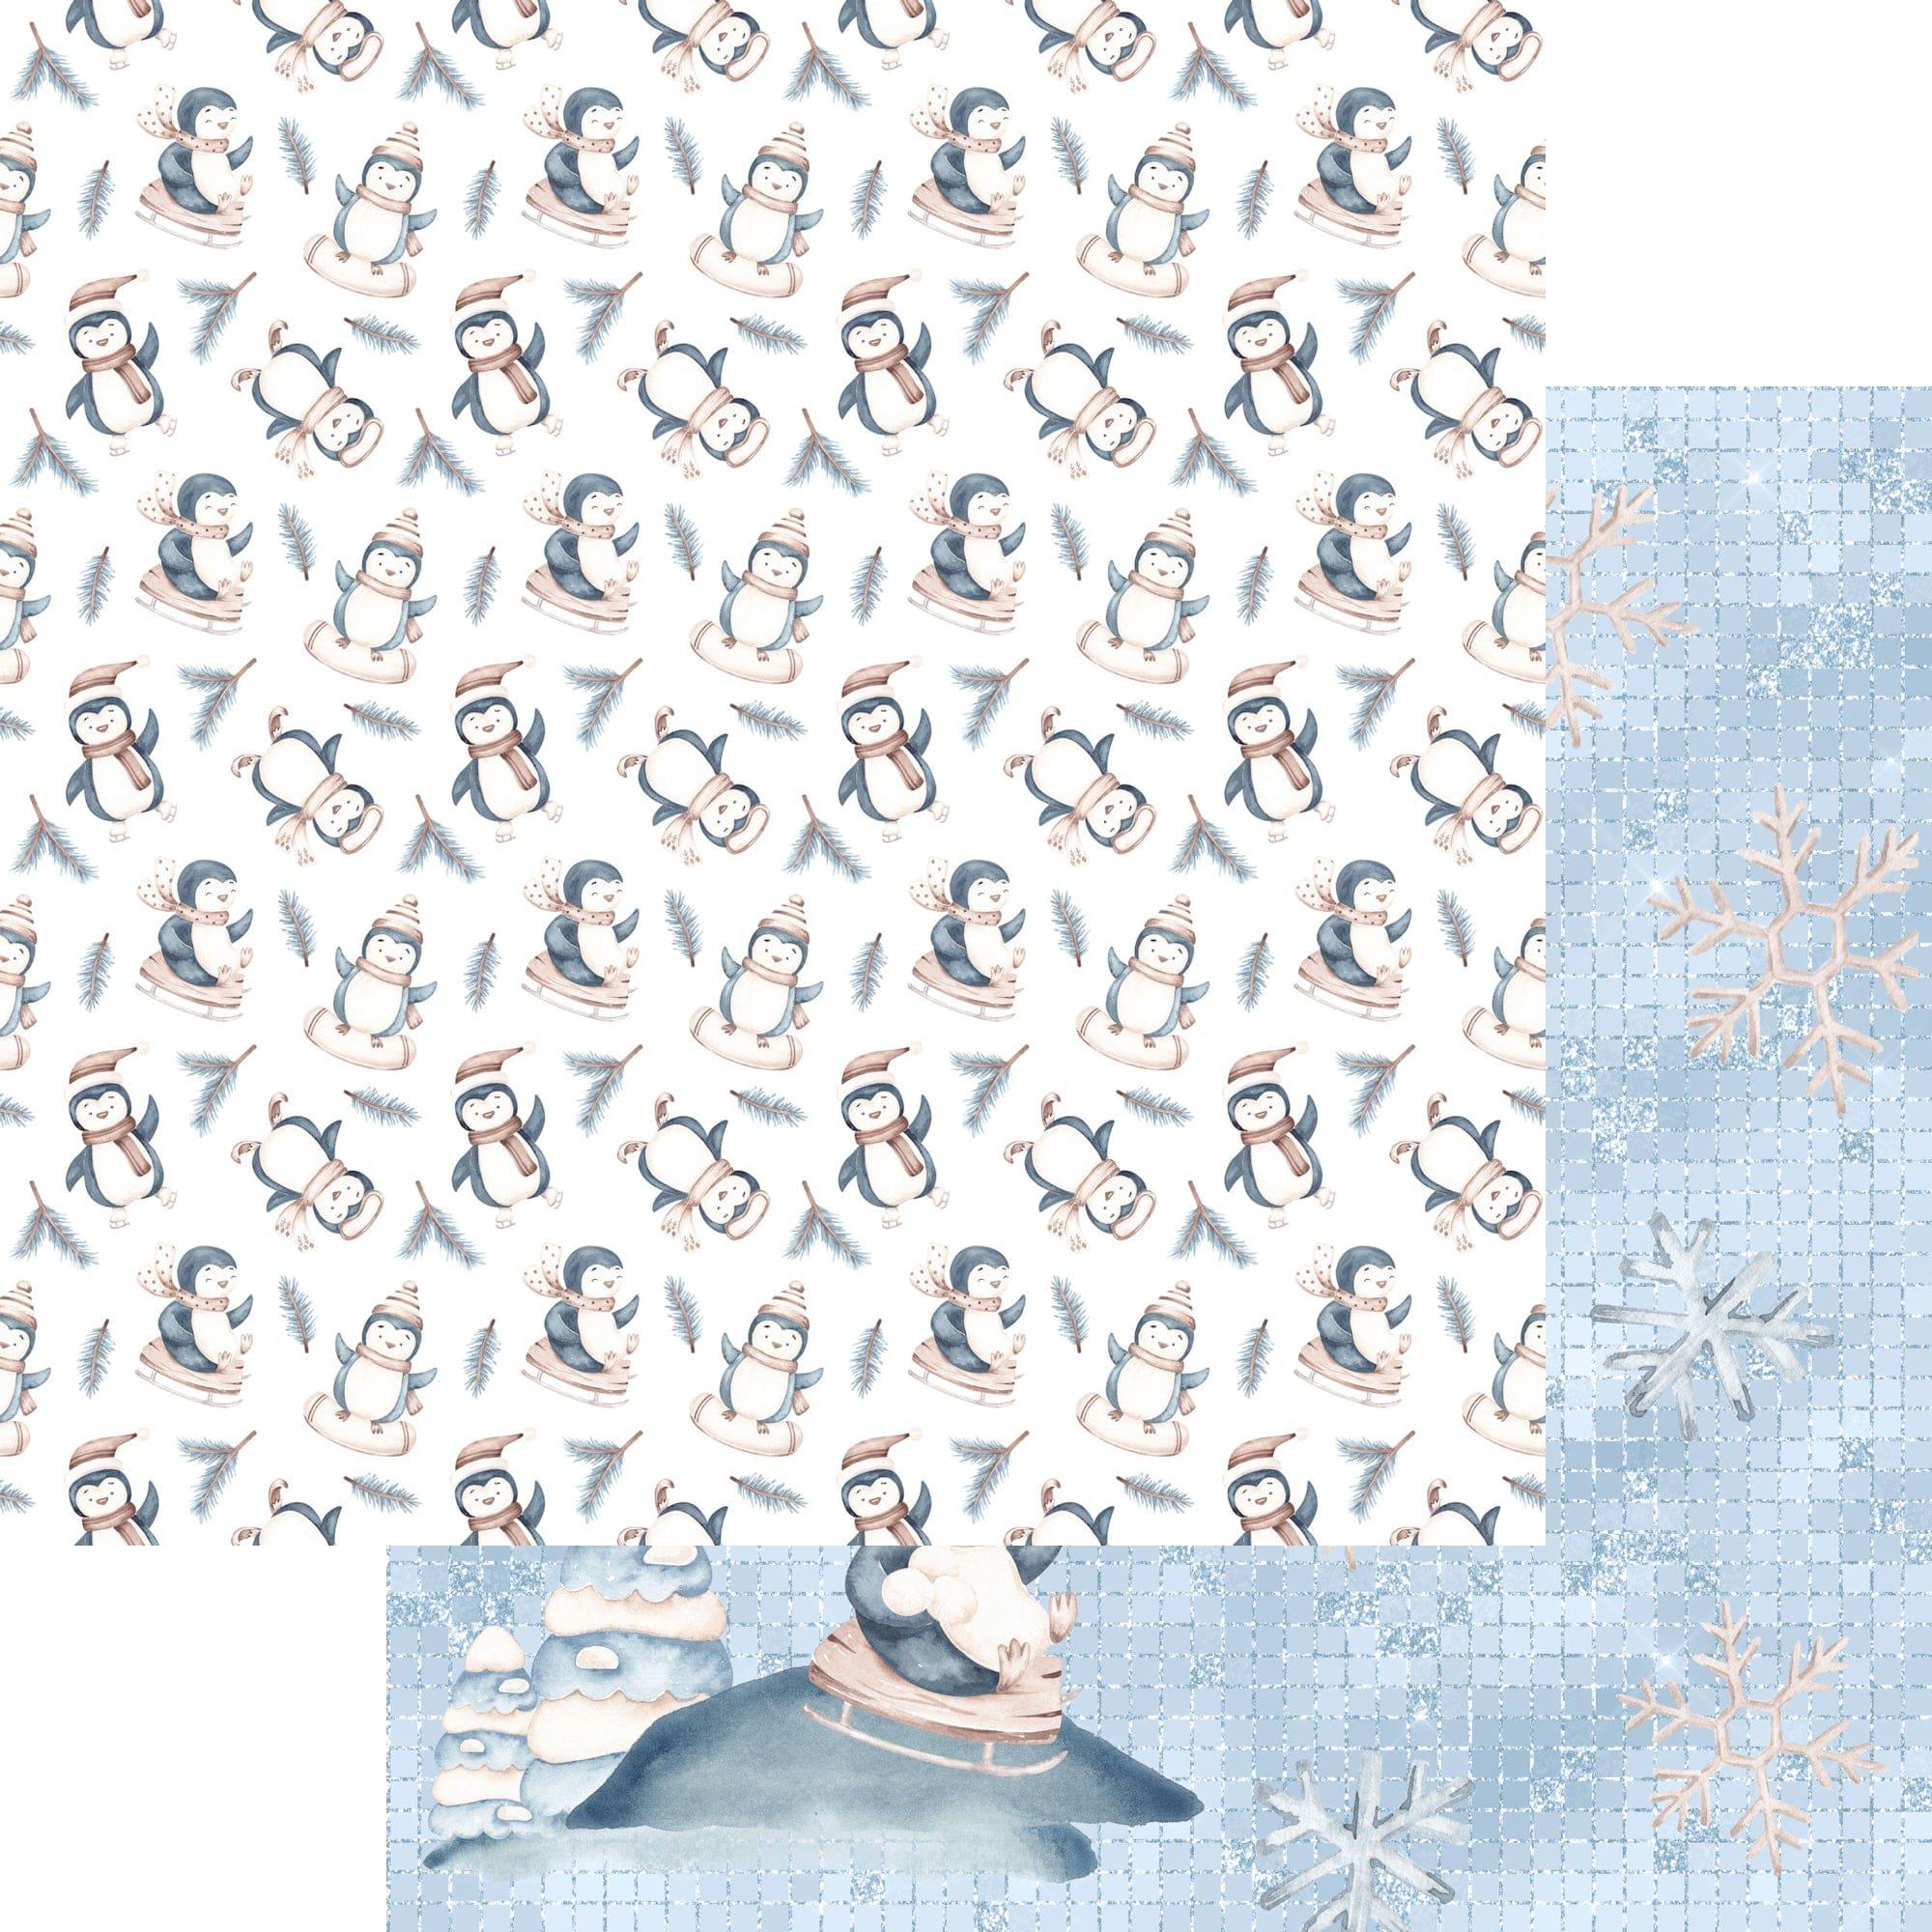 Winter Penguins 12 x 12 Scrapbook Paper & Embellishment Kit by SSC Designs - Scrapbook Supply Companies